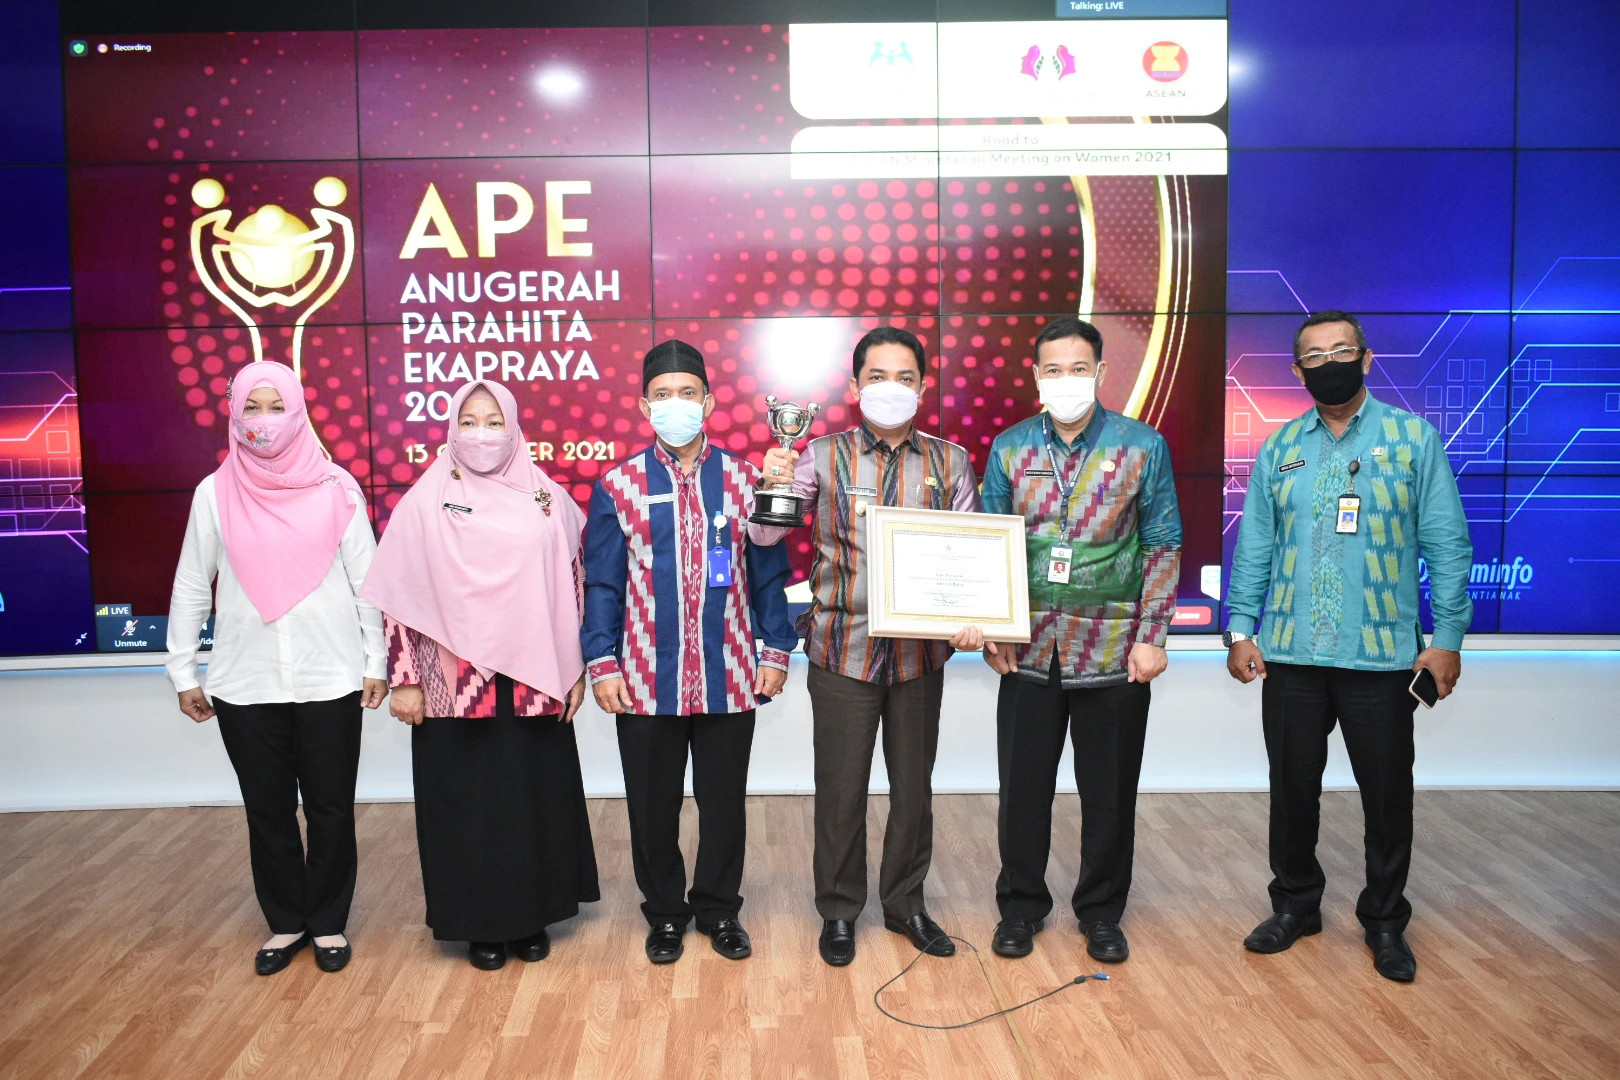 Foto Predikat Madya pada Anugerah Parahita Ekapraya (APE), dari Menteri Pemberdayaan Perempuan dan Perlindungan Anak (PP-PA), (13 Oktober 2021)